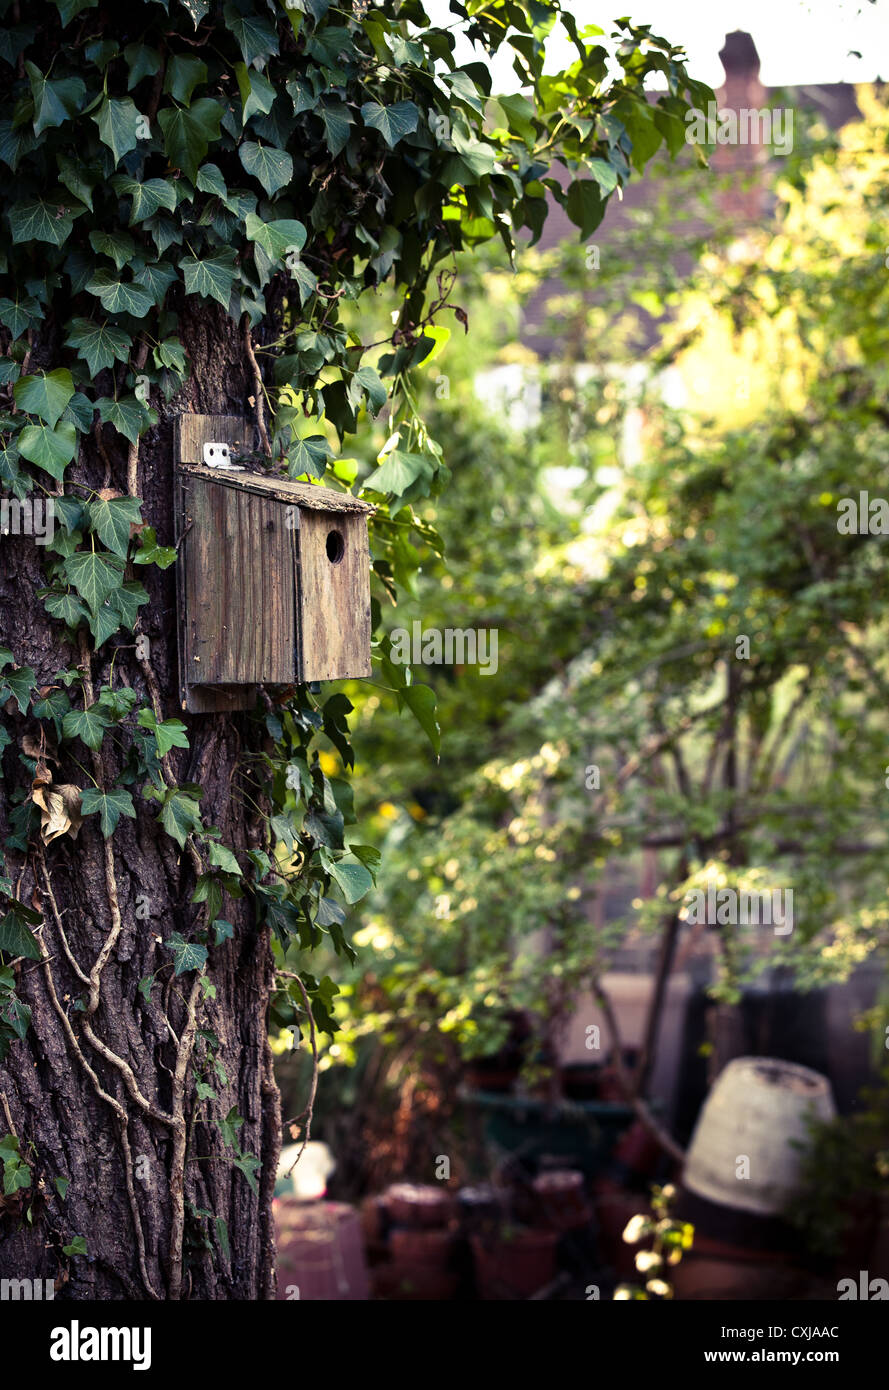 Birds nesting box on tree Stock Photo